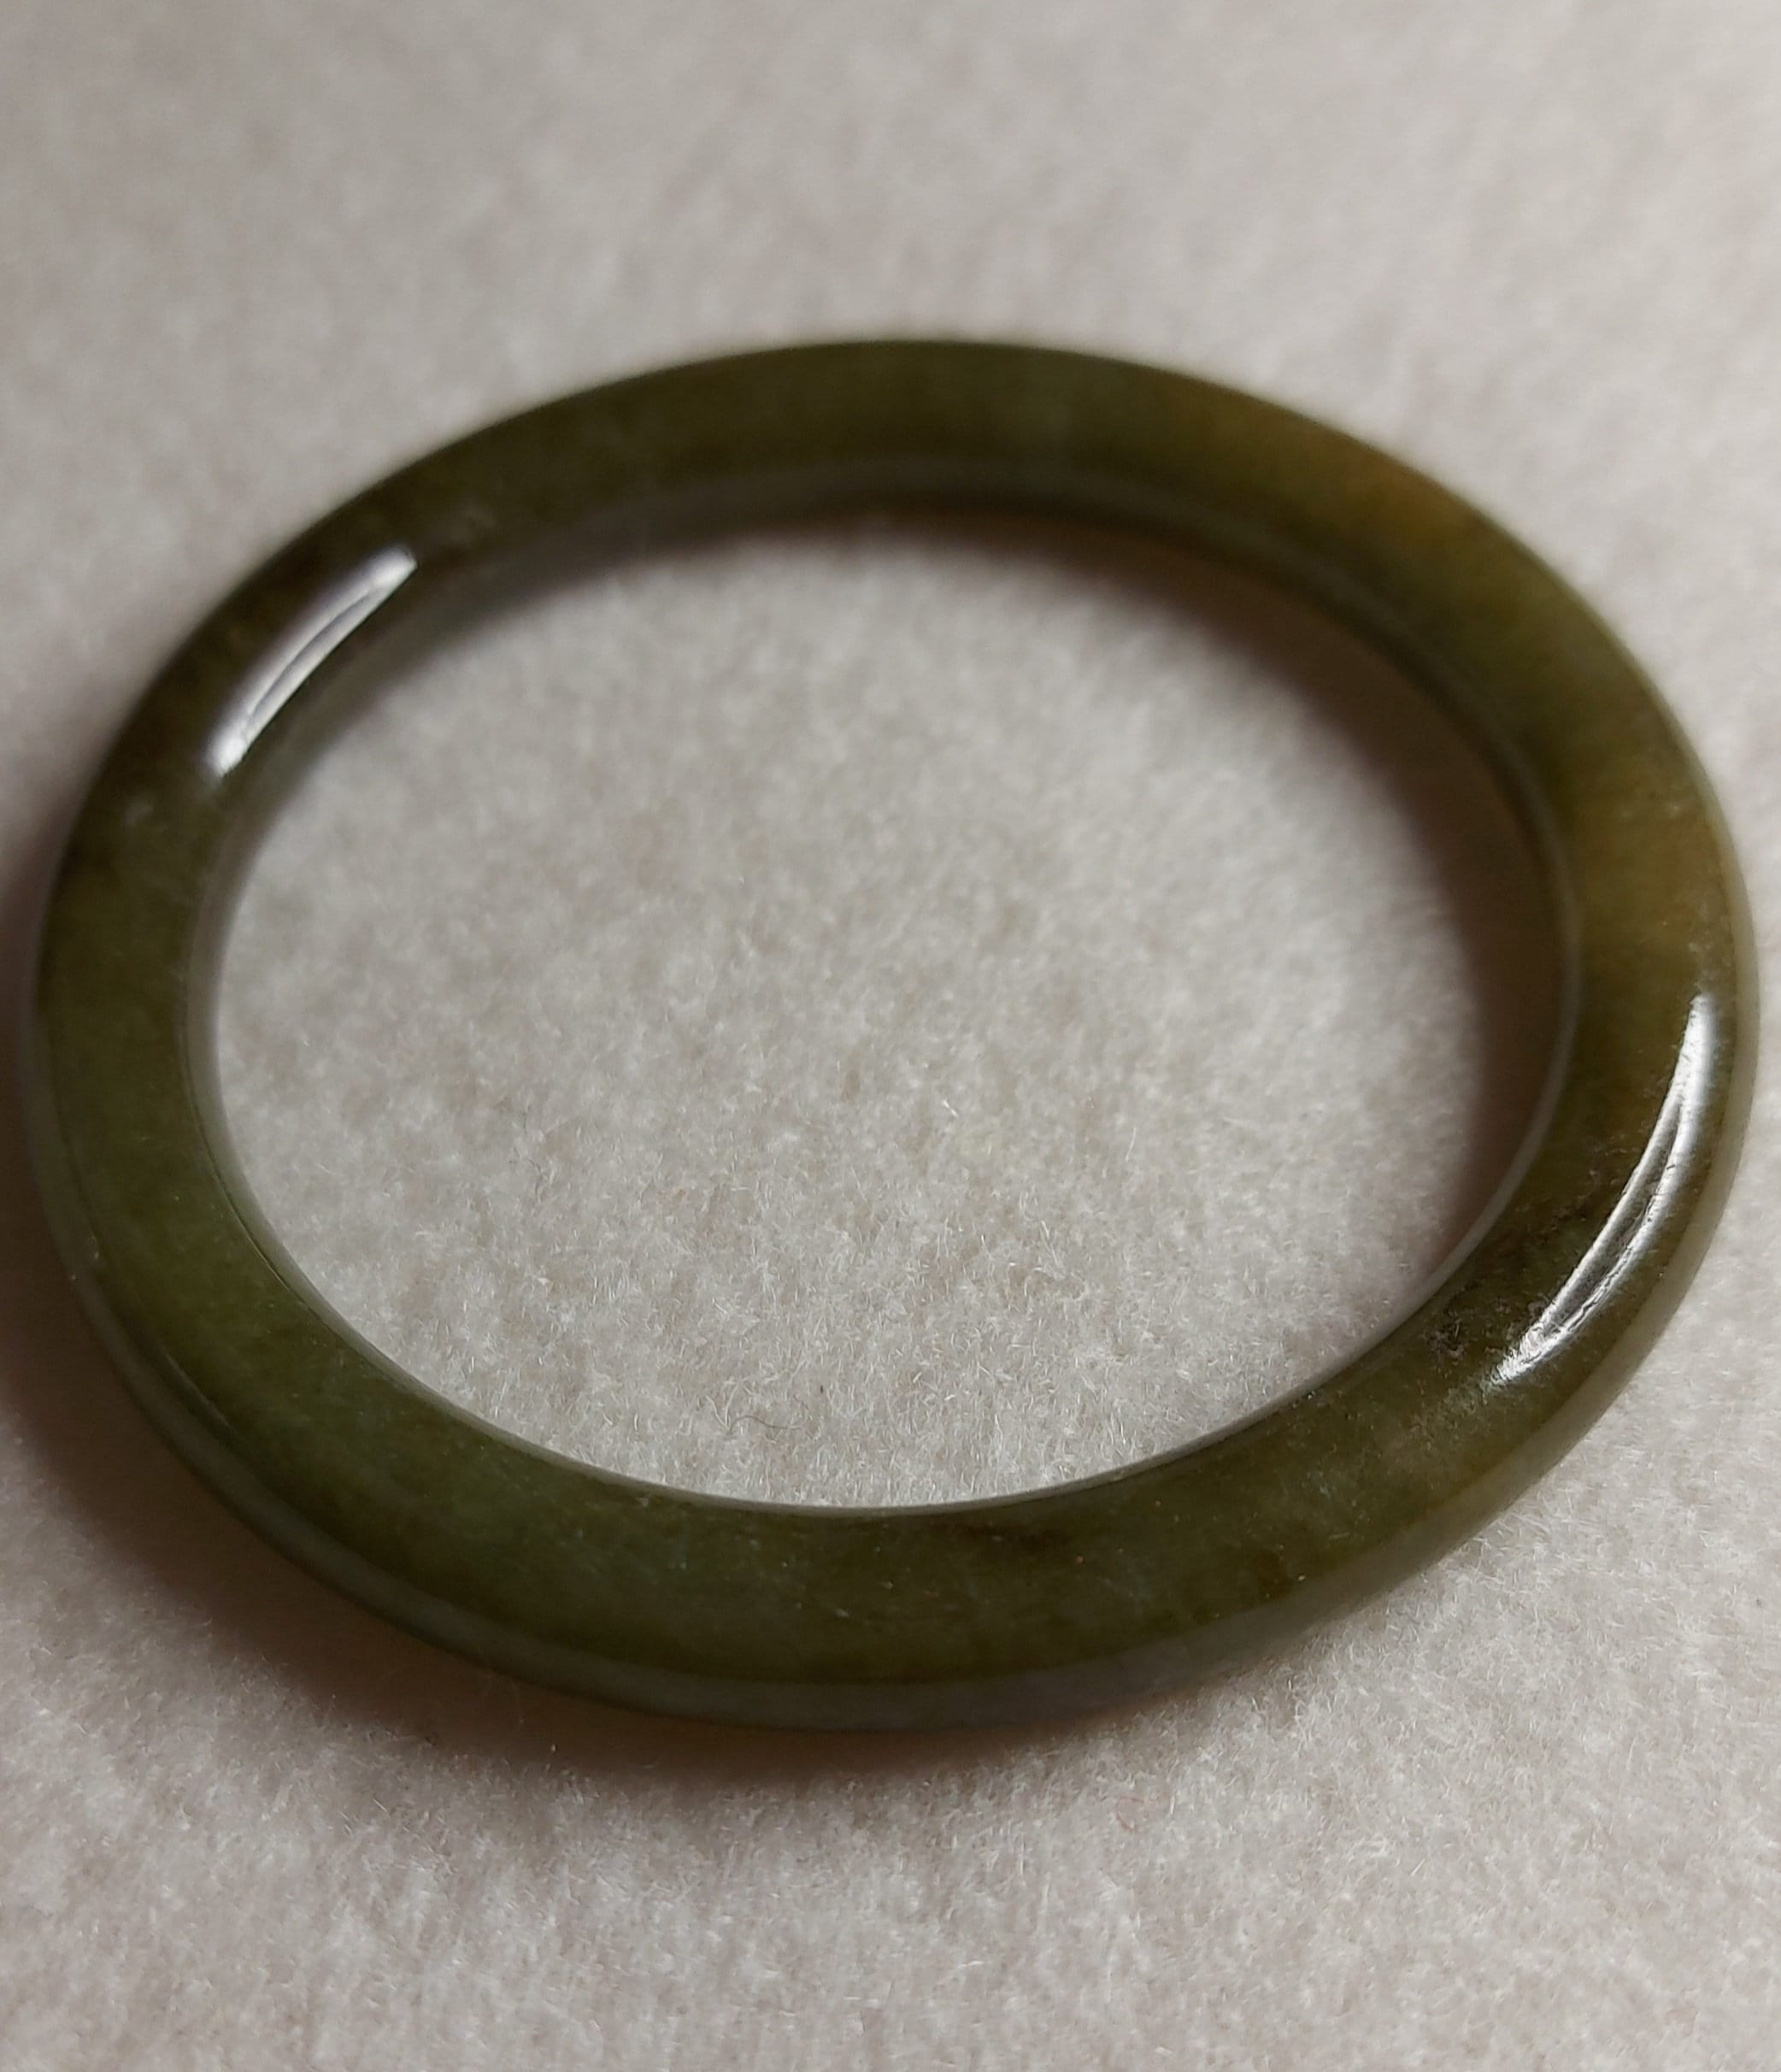 Genuine Green Jade Round Beads Bracelet Bangle ( 9.5 mm ) | Jade Jewelry, Nephrite Jade Jewelry | RealJade, authenticity Is Timeless 6.5 Inches